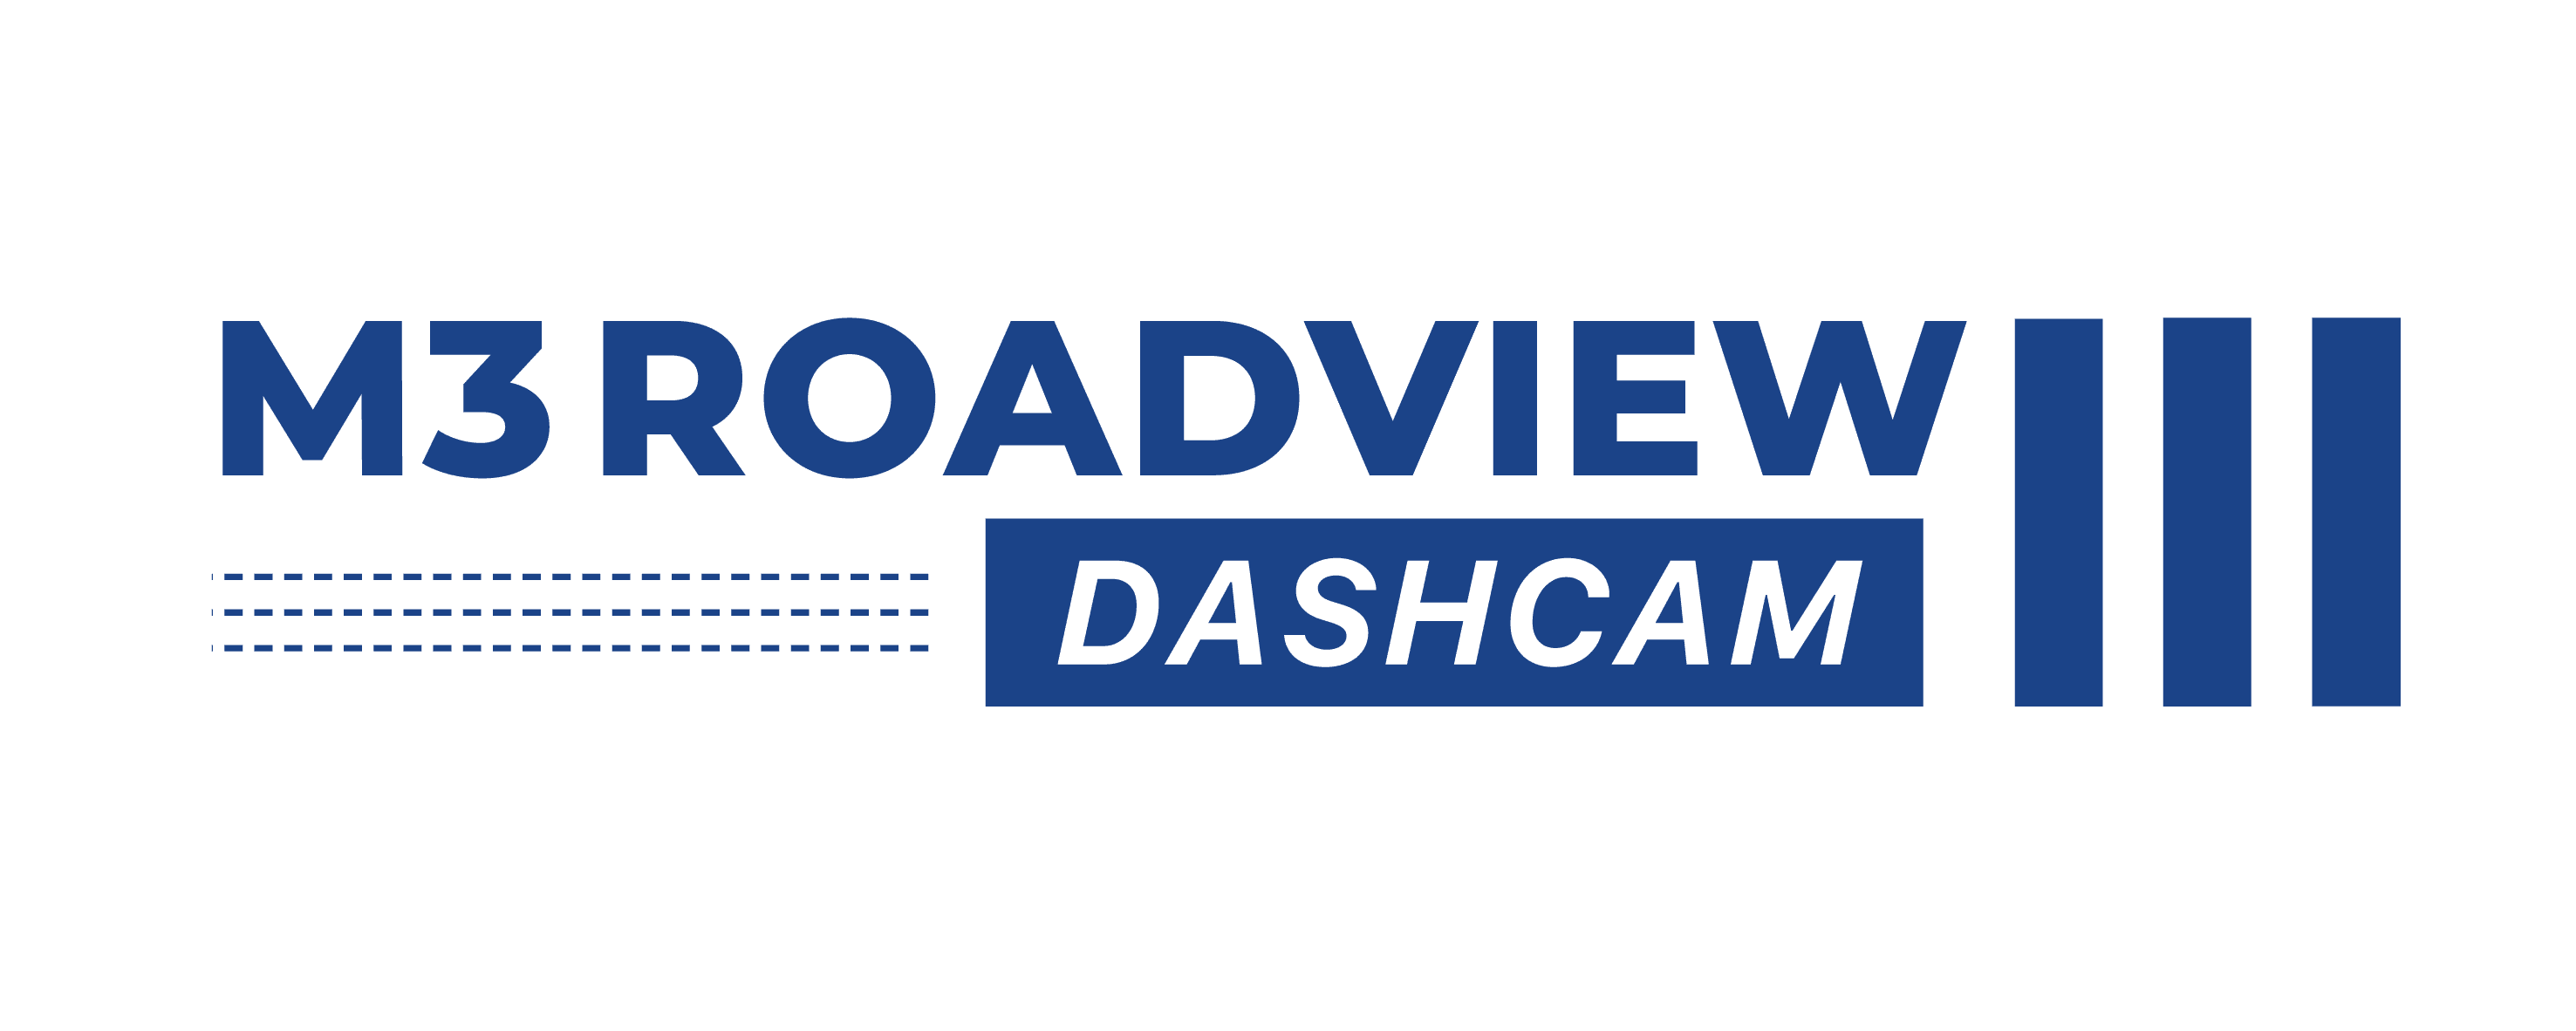 M3 RoadView Dash Camera Logo